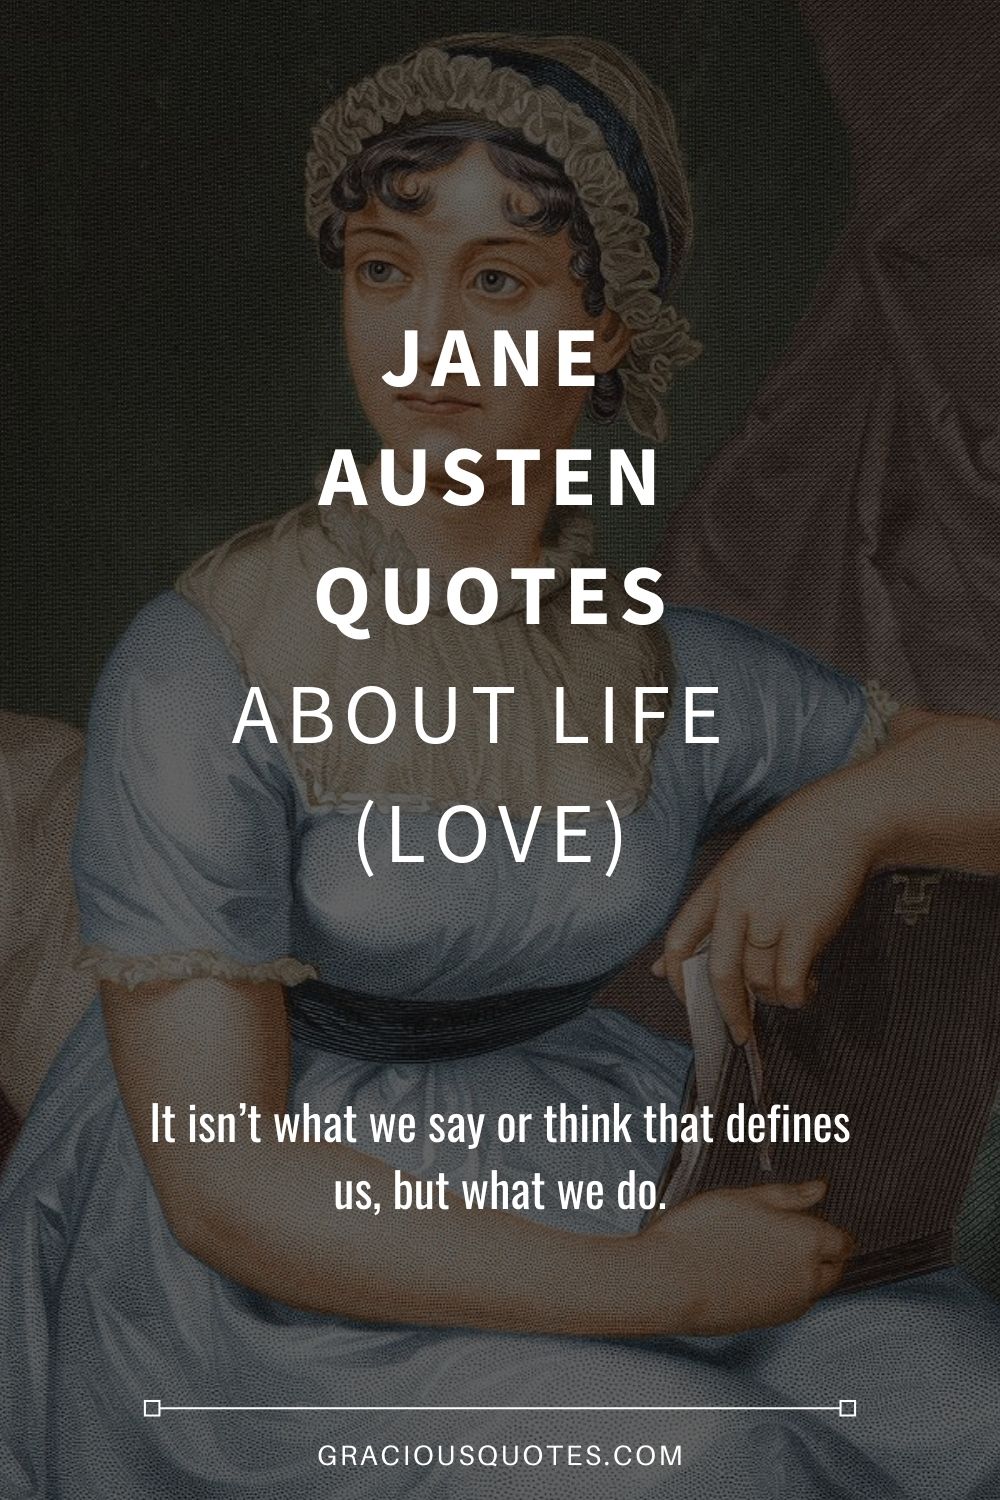 Jane Austen Quotes About Life (LOVE) - Gracious Quotes